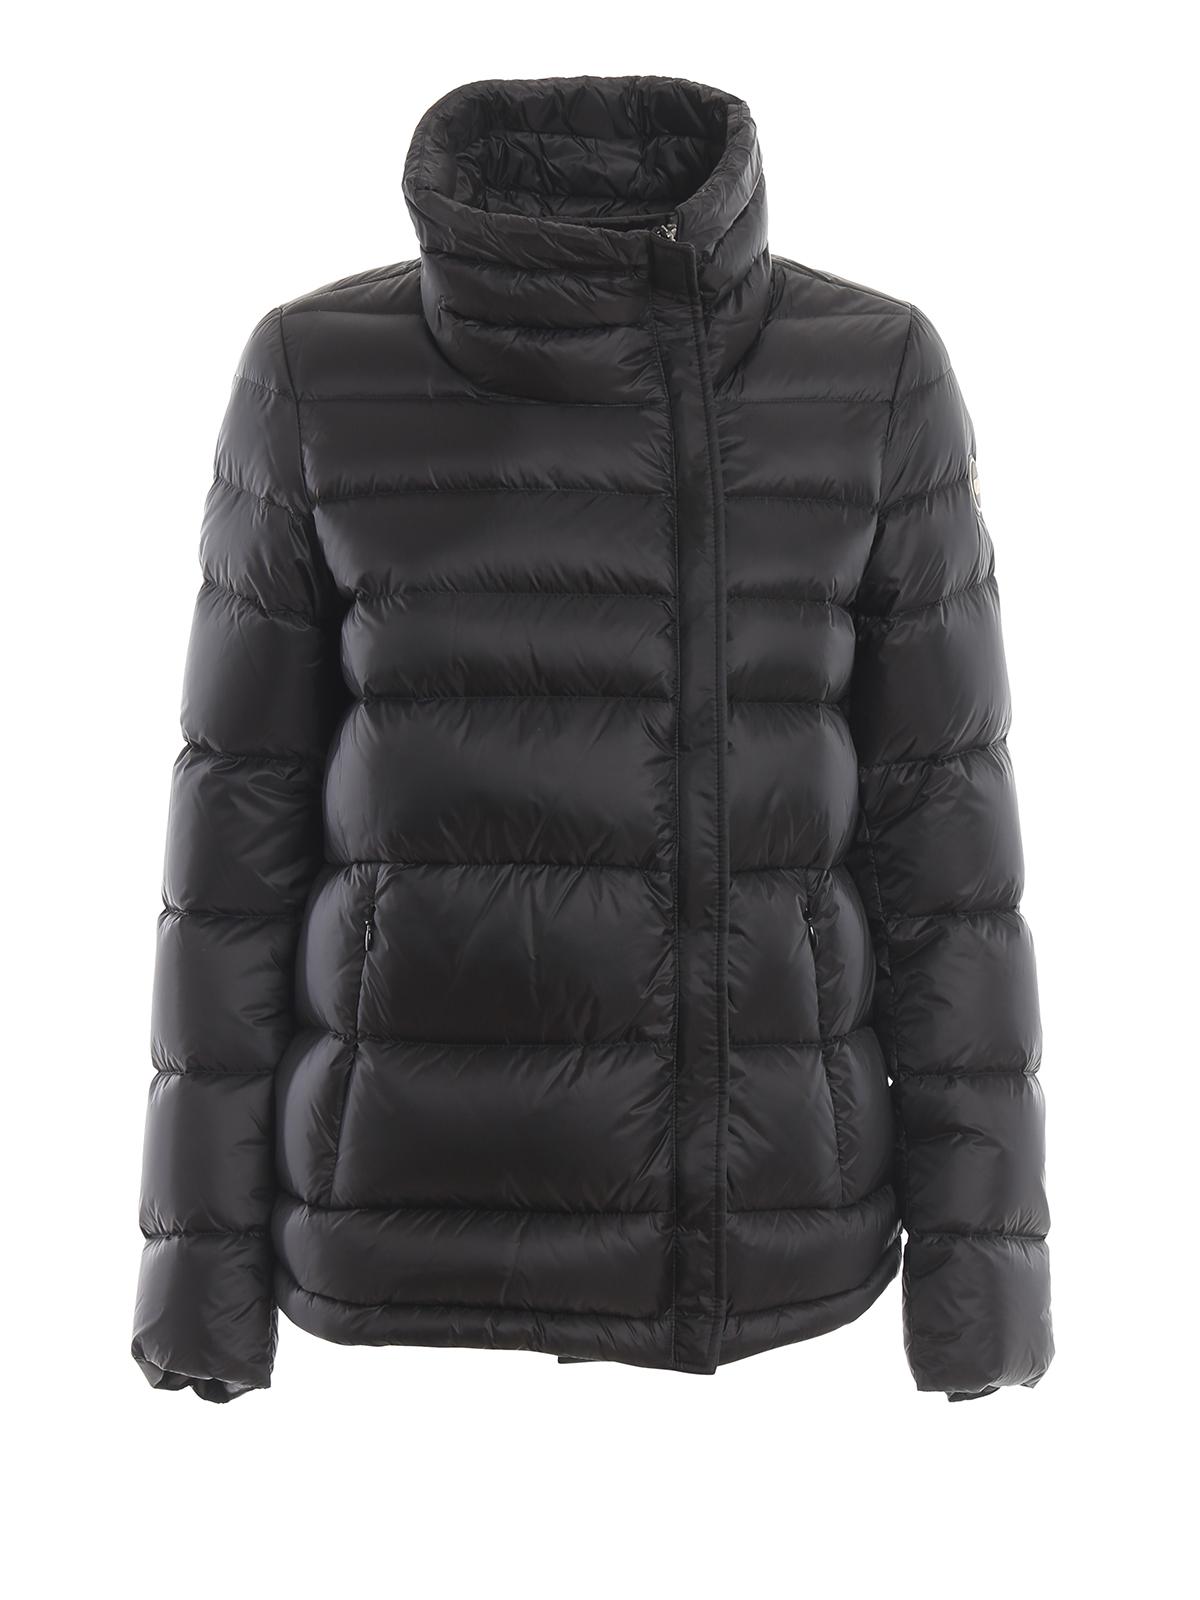 Colmar Synthetic High Collar Matte Black Puffer Jacket for Men - Lyst